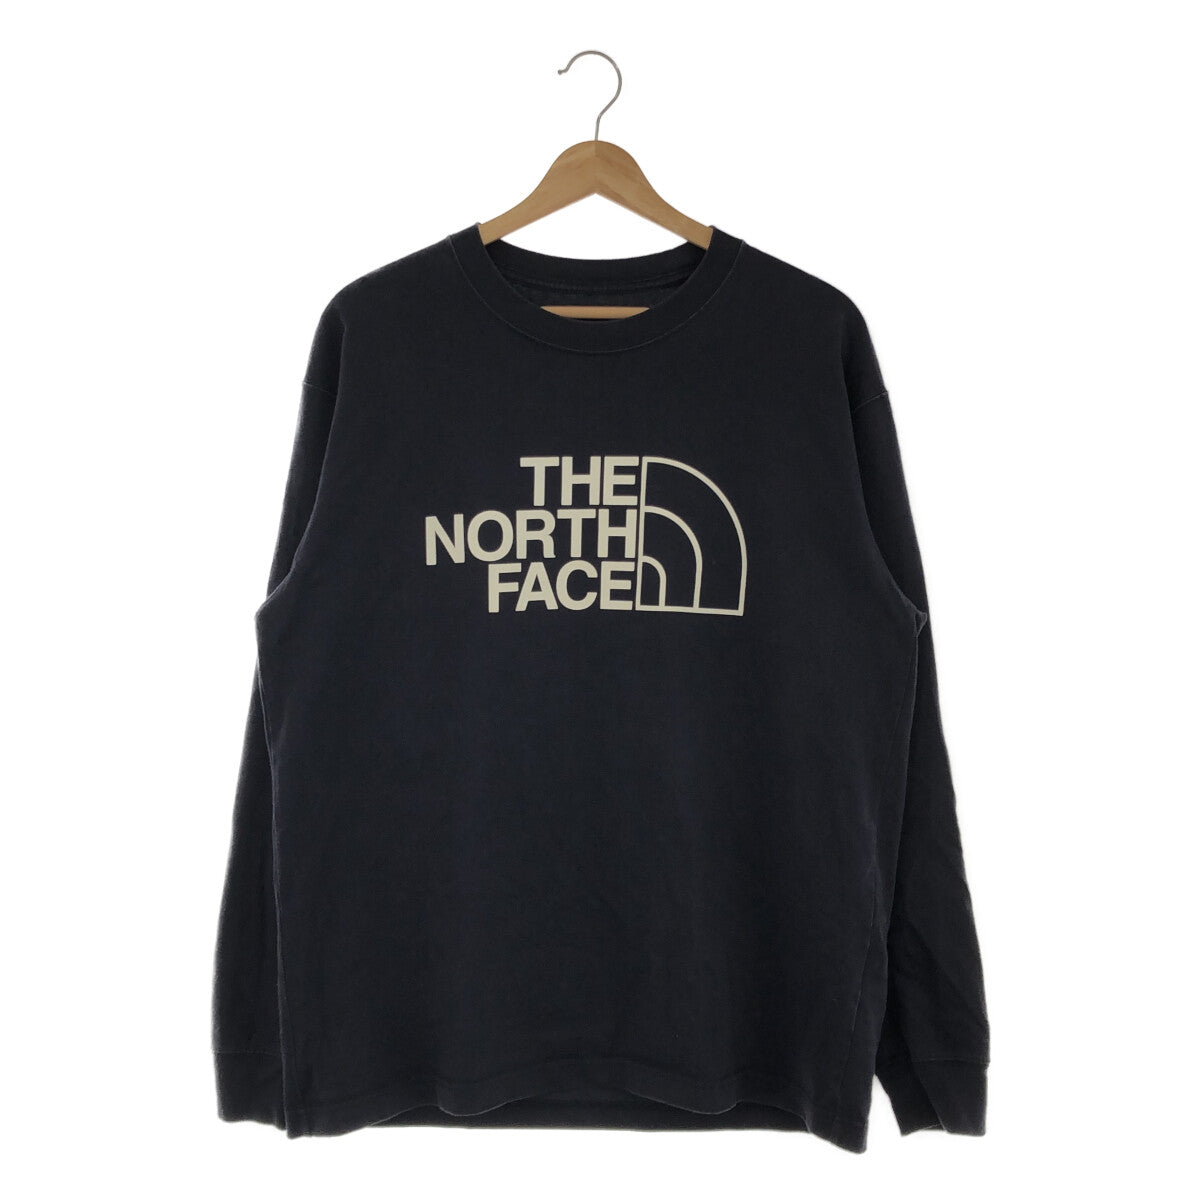 THE NORTH FACE / ザノースフェイス | ロングスリーブ ハーフドーム ロゴ Tシャツ | XL |